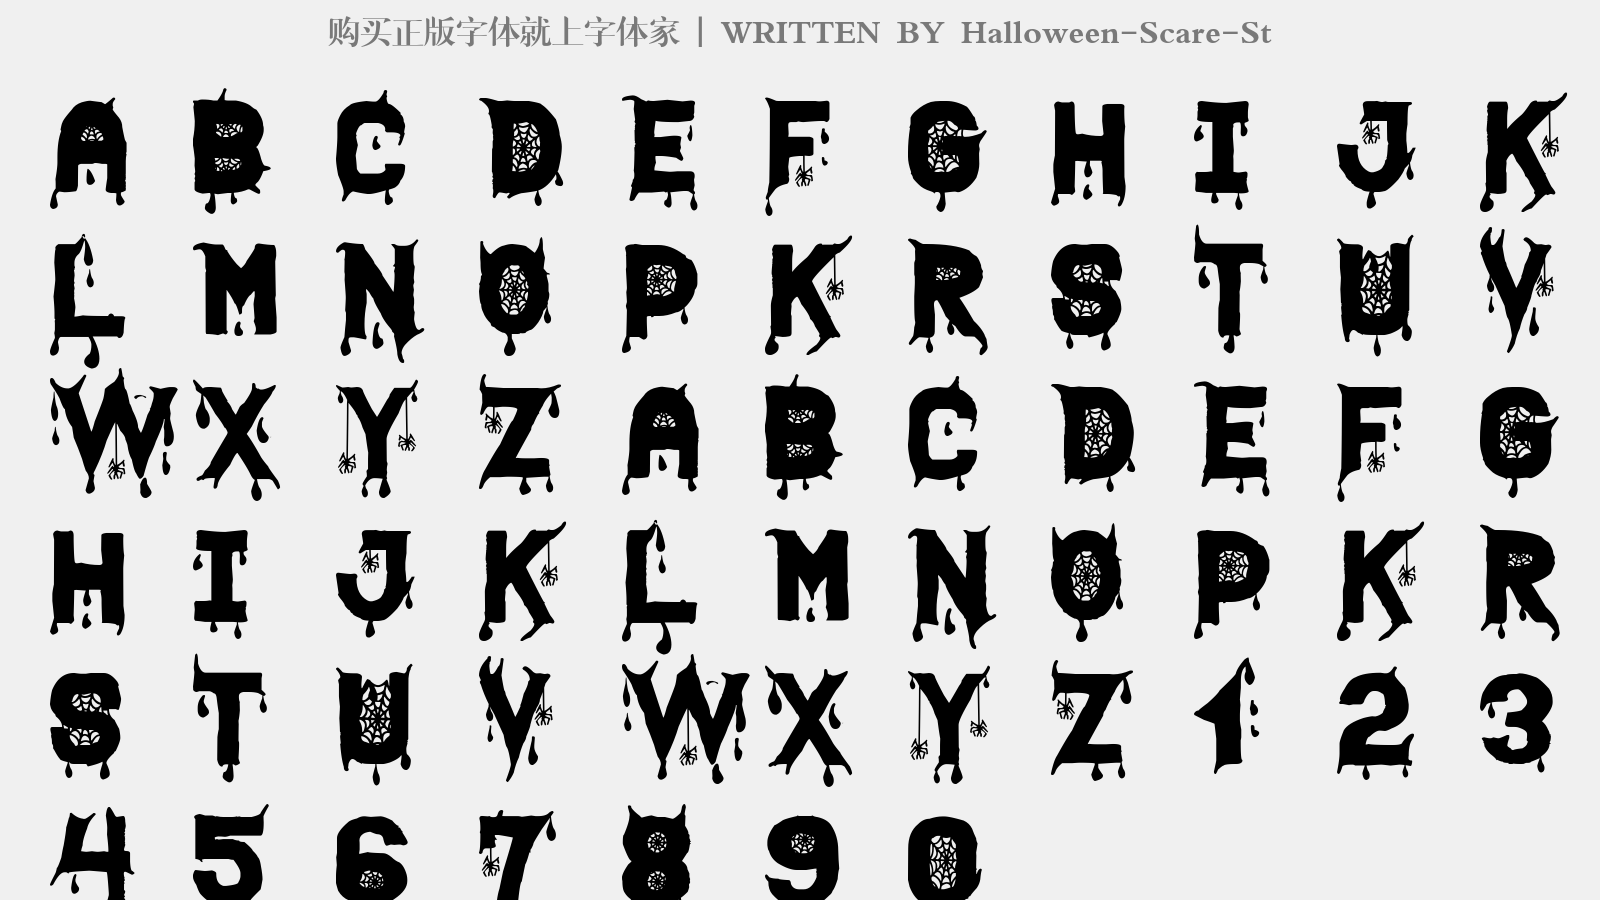 Halloween-Scare-St - 大写字母/小写字母/数字